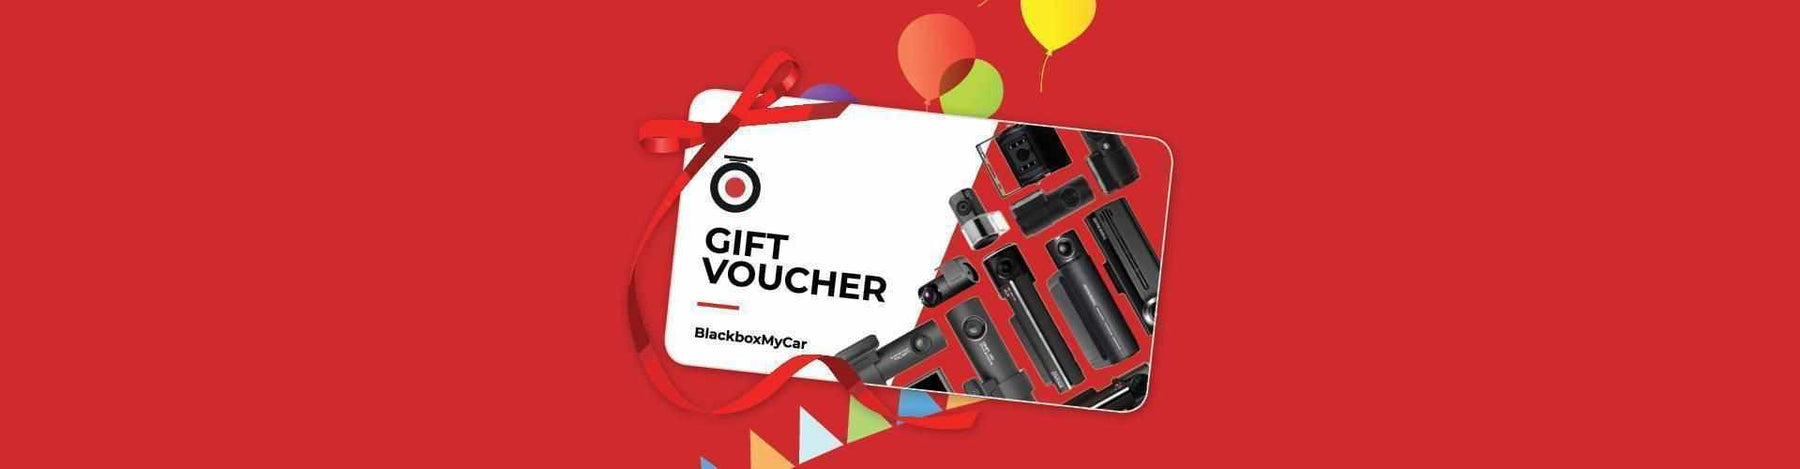 Gift Card Vouchers Now Available at BlackboxMyCar -  - BlackboxMyCar Canada